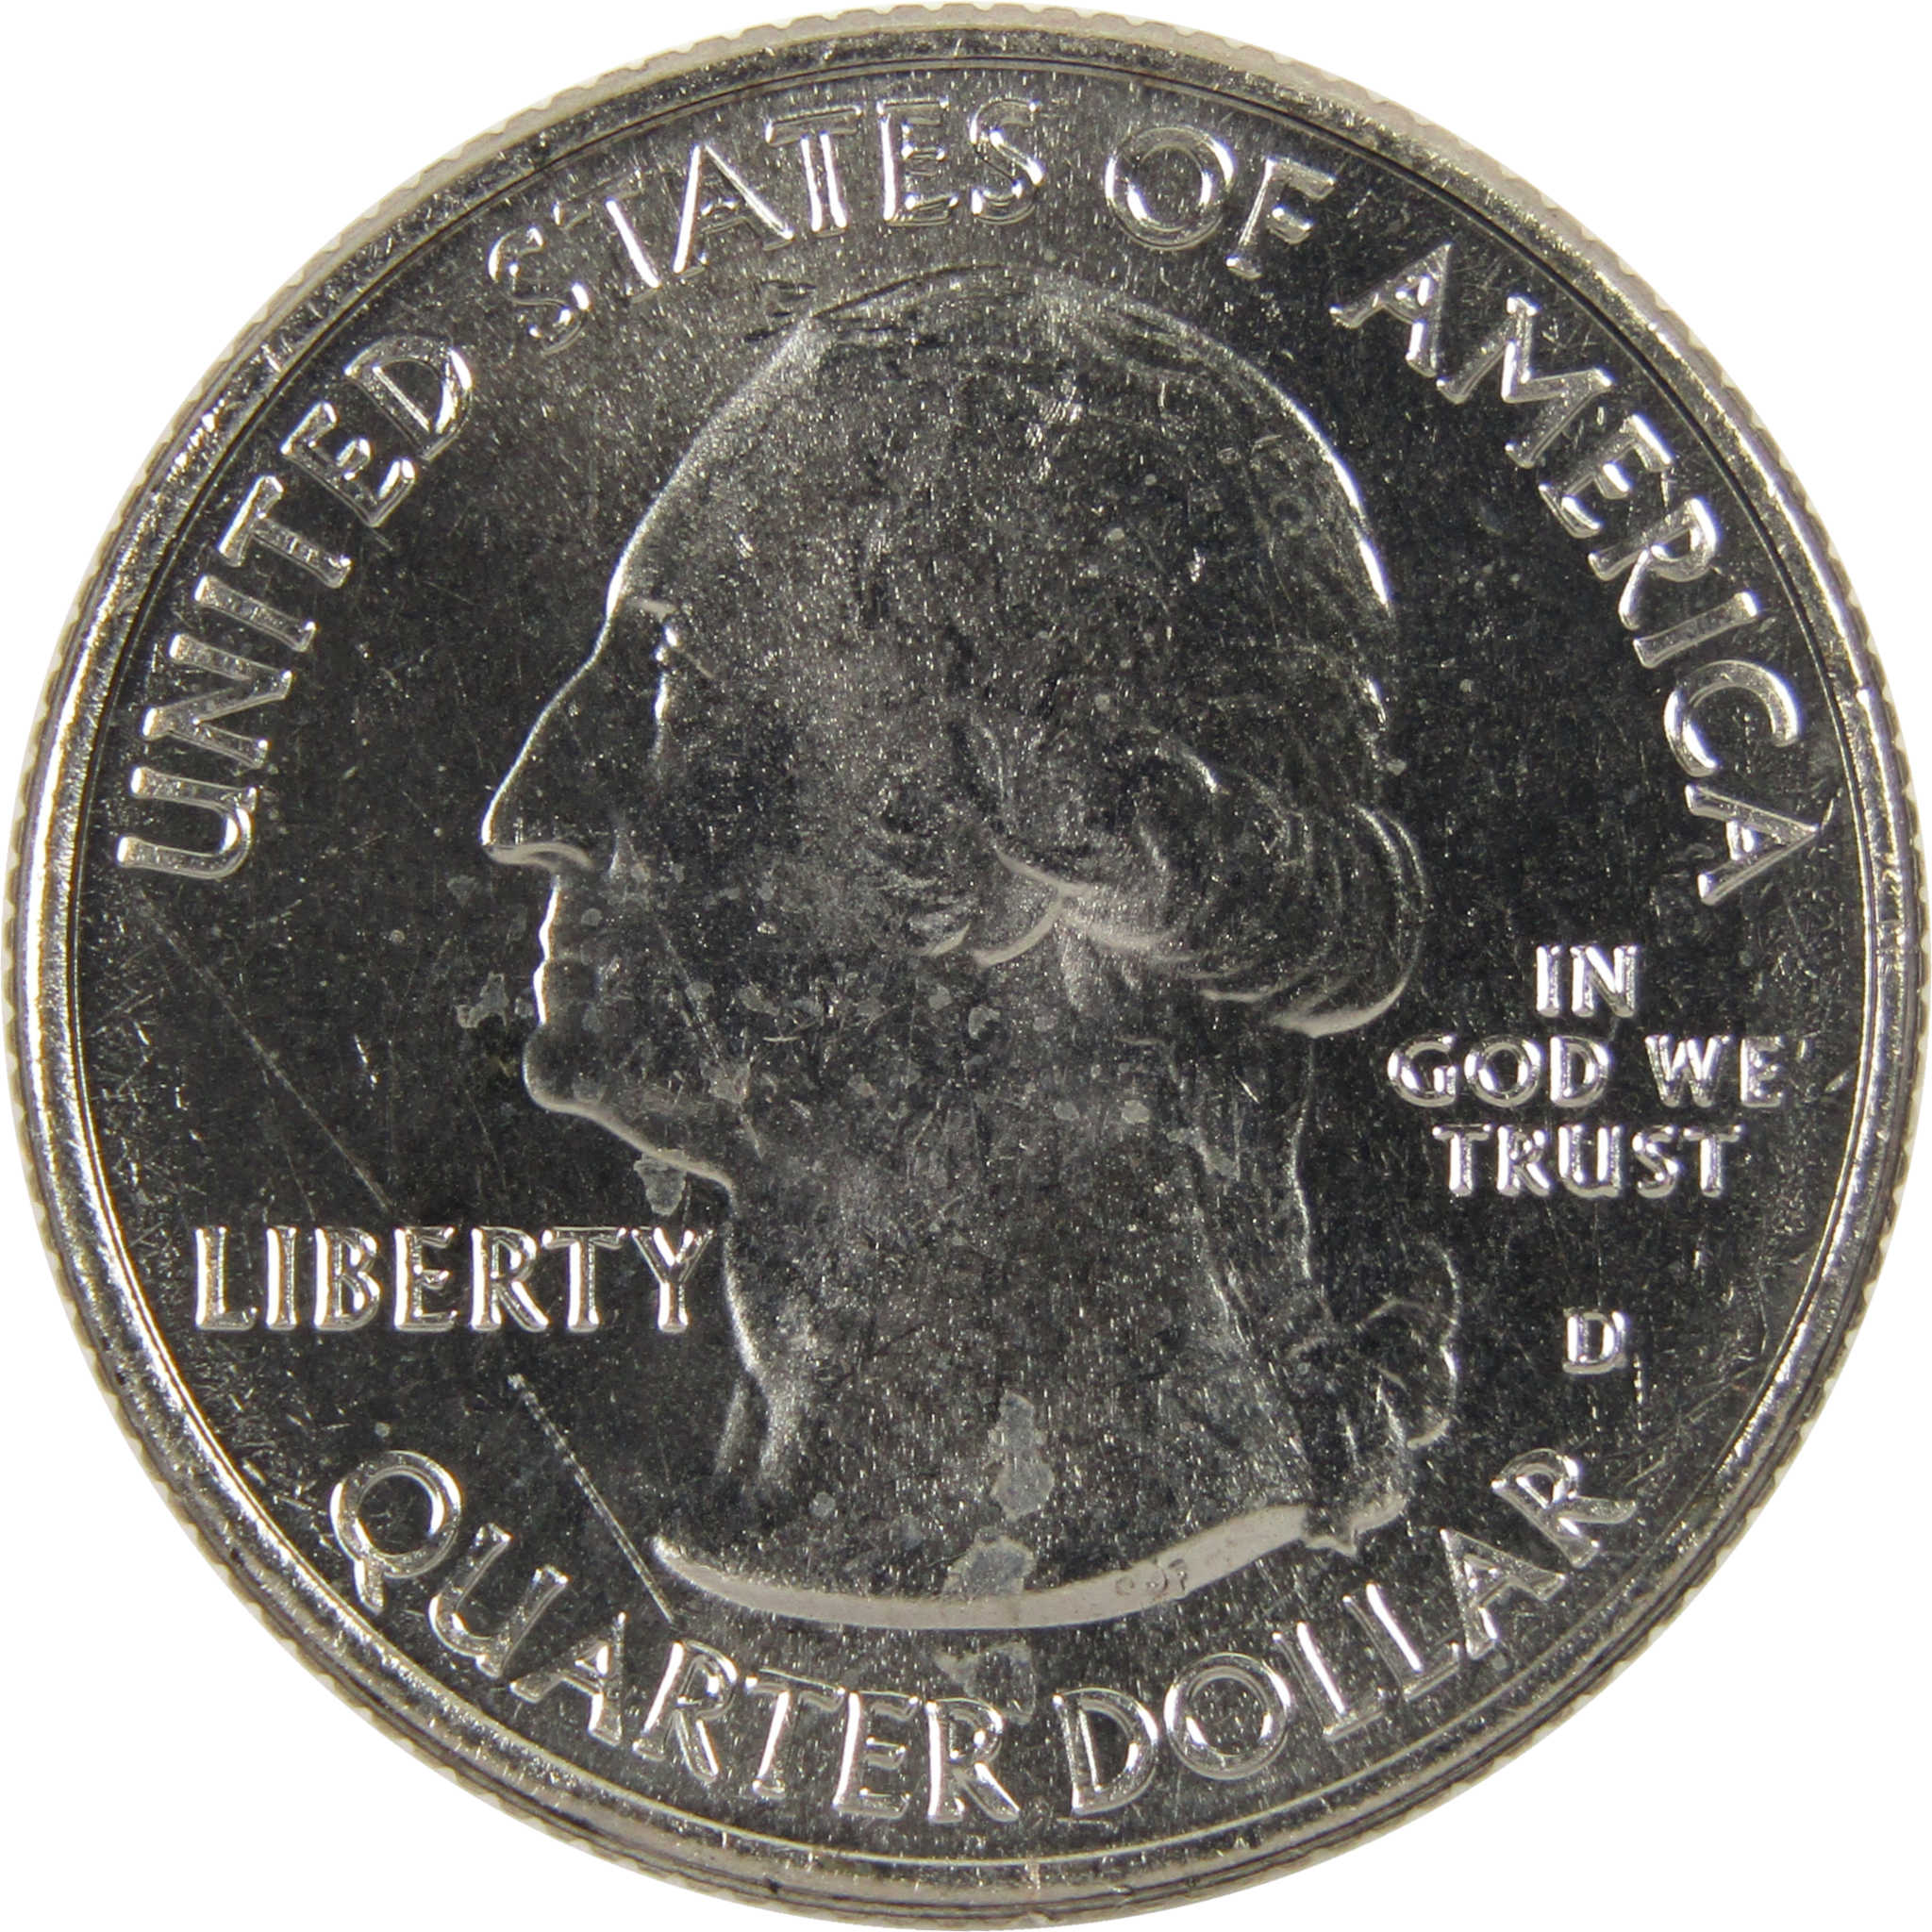 2017 D Ozark NSR National Park Quarter BU Uncirculated Clad ATB Coin